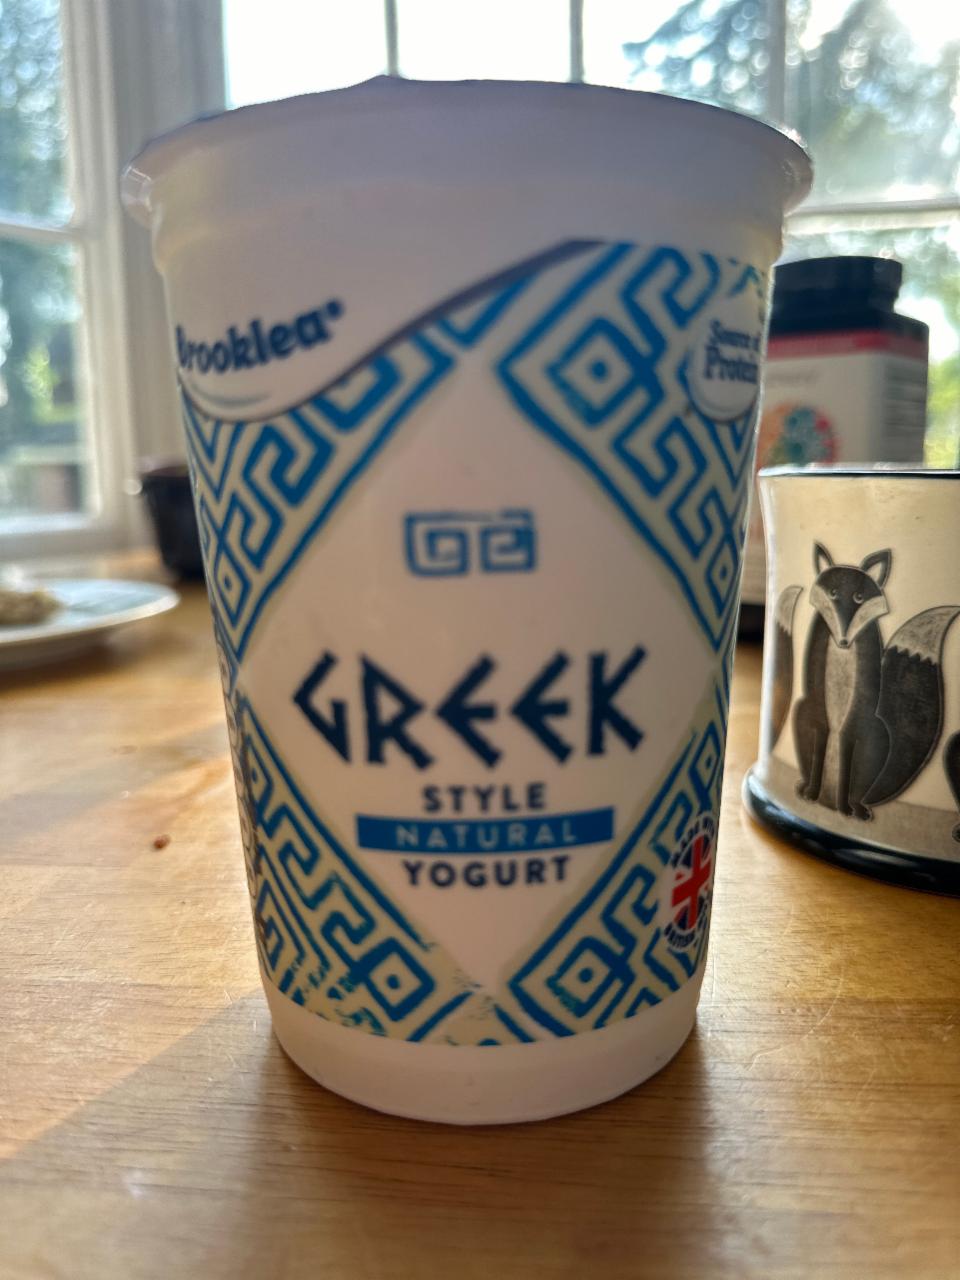 Фото - Greek style natural yoghurt Brooklea